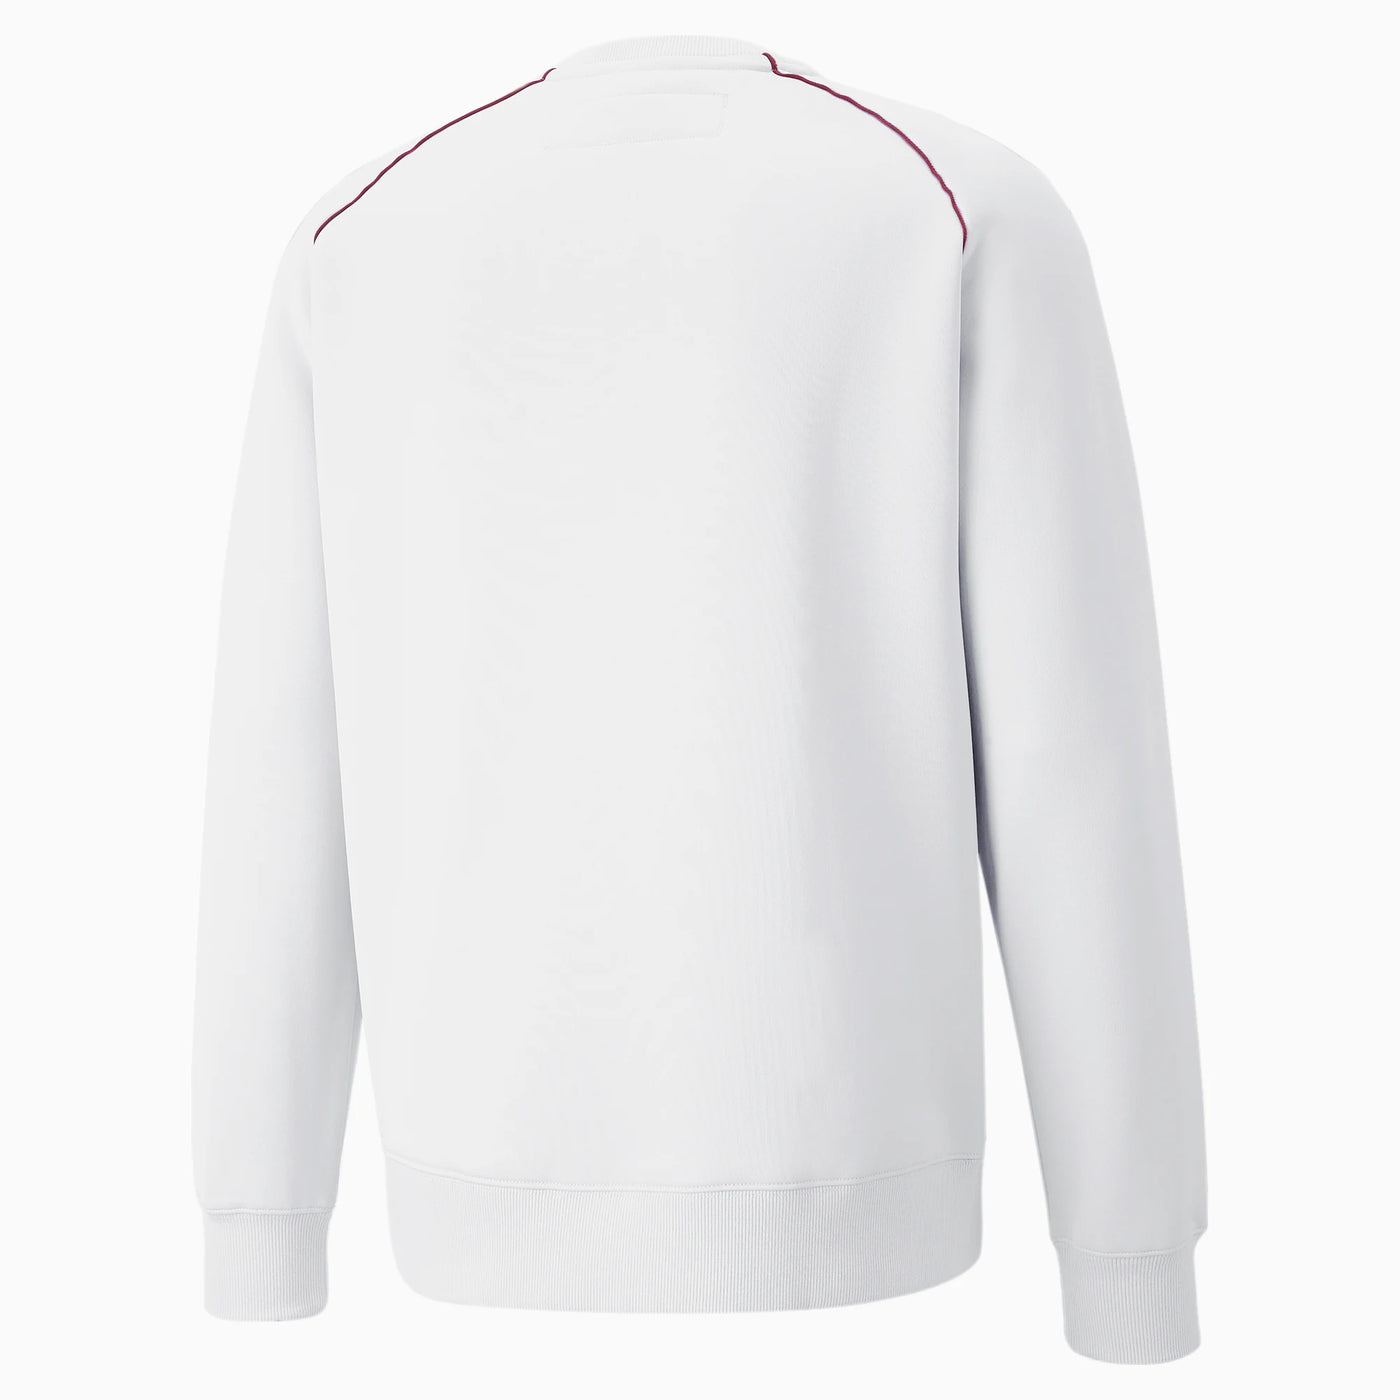 Puma x TMC Status Symbol Crewneck Sweatshirt - White/Burgundy - Back